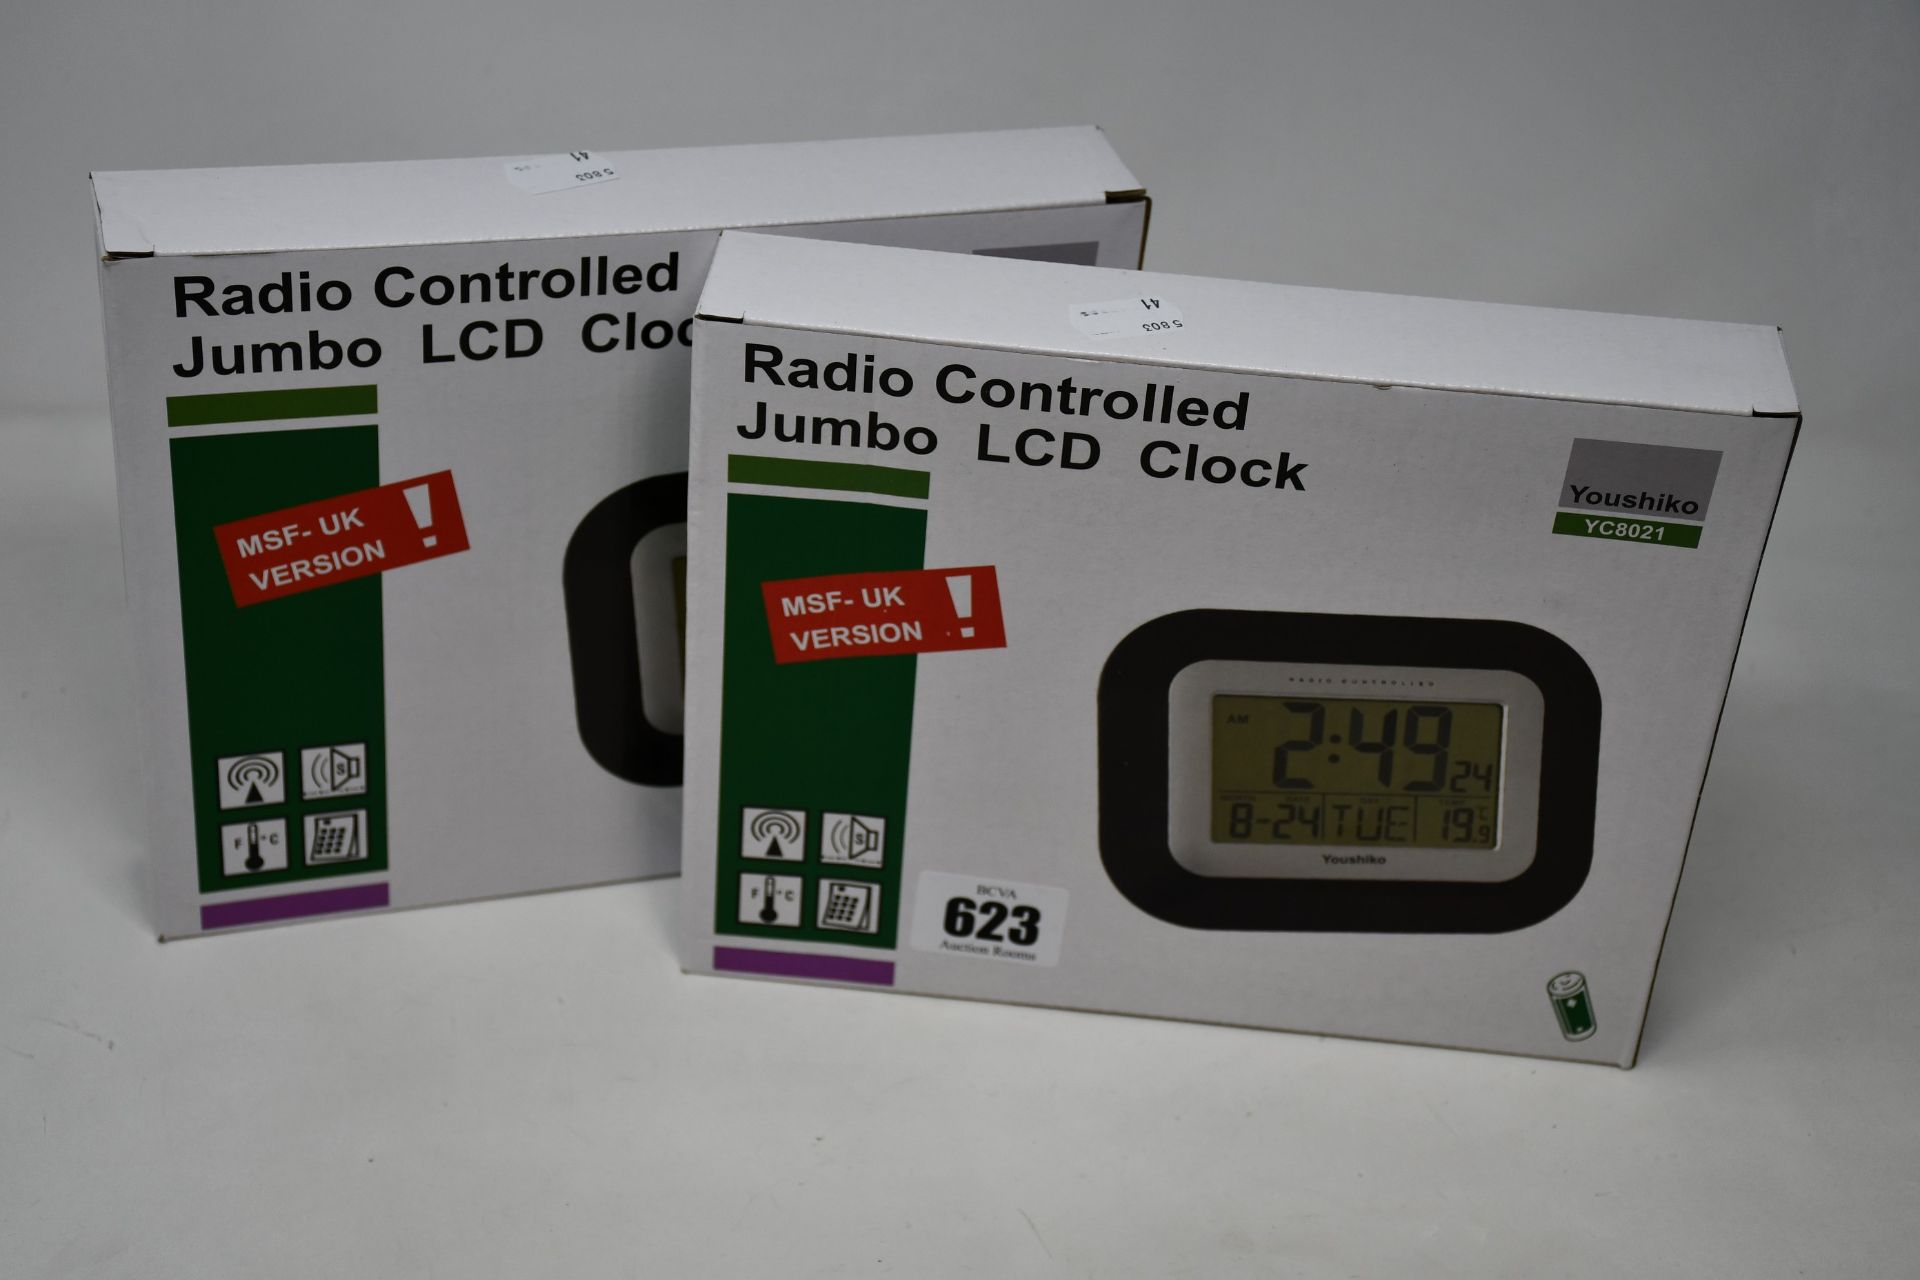 Seven boxed as new Youshiko Radio Controlled Jumbo LCD Clock (YC8021).